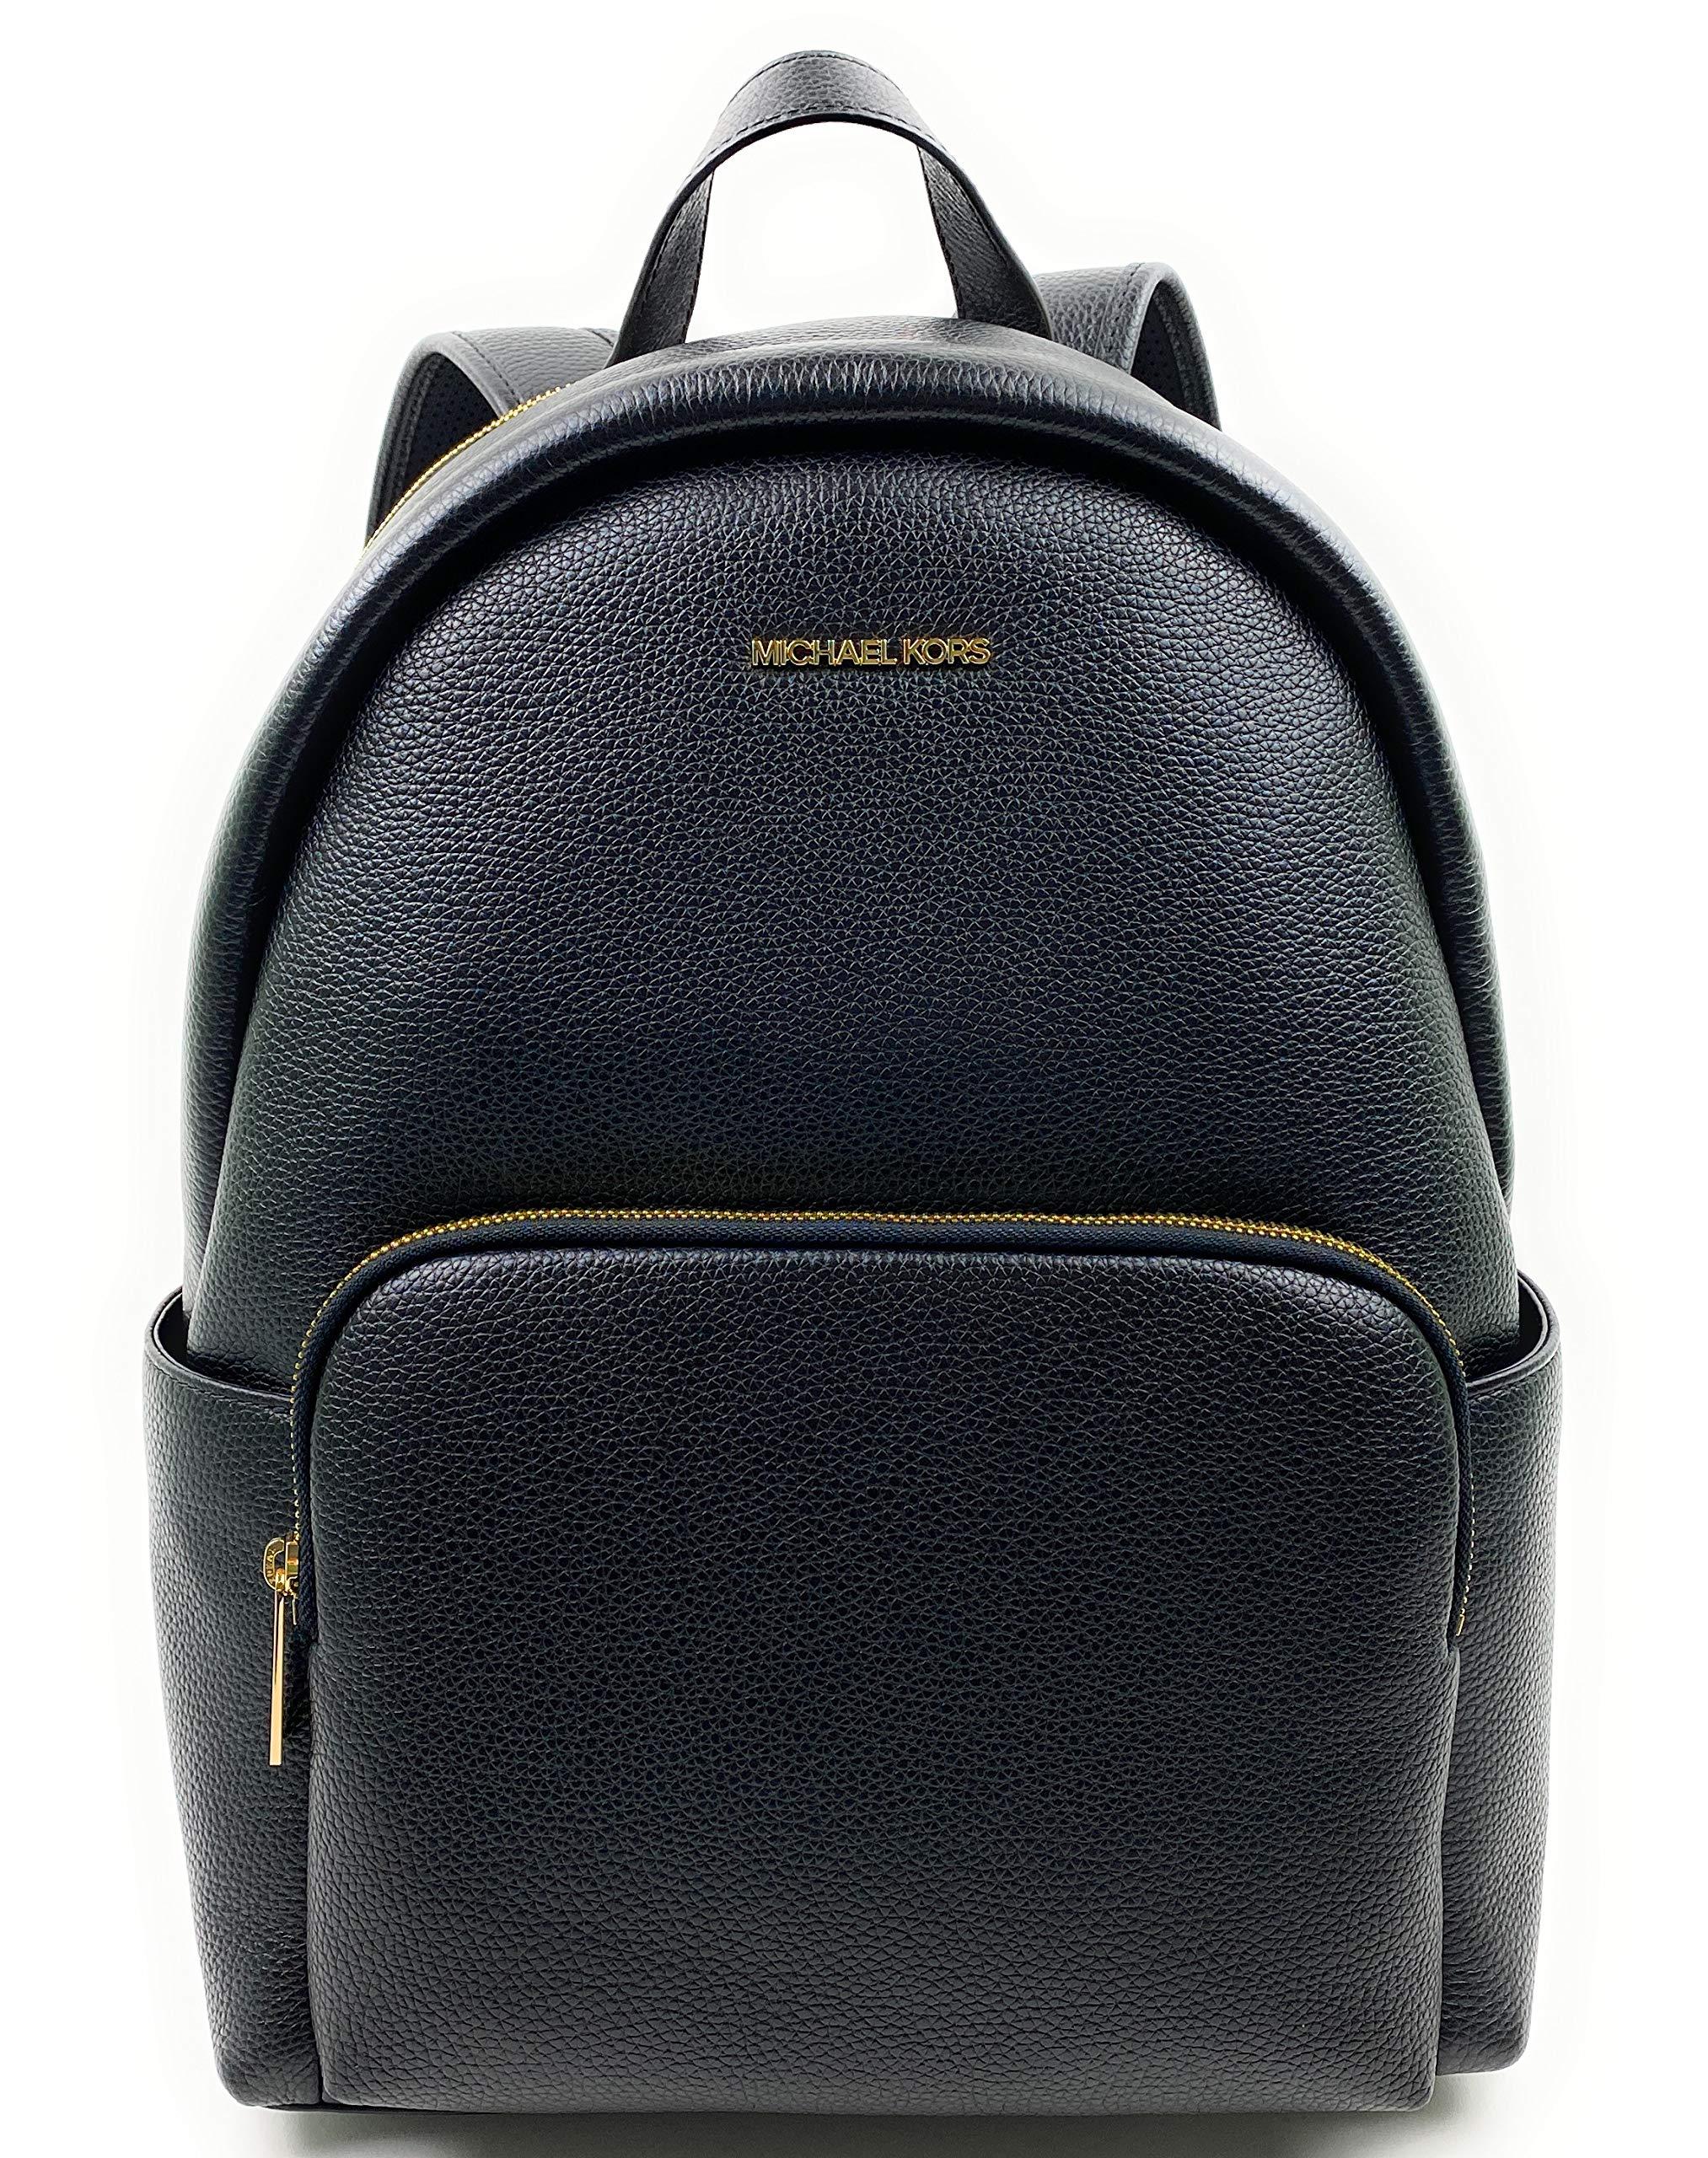 Michael Kors Erin Medium Backpack PVC Leather MK Signature Black White  Multi 194900509074  eBay  Medium backpack Backpacks Black wristlet